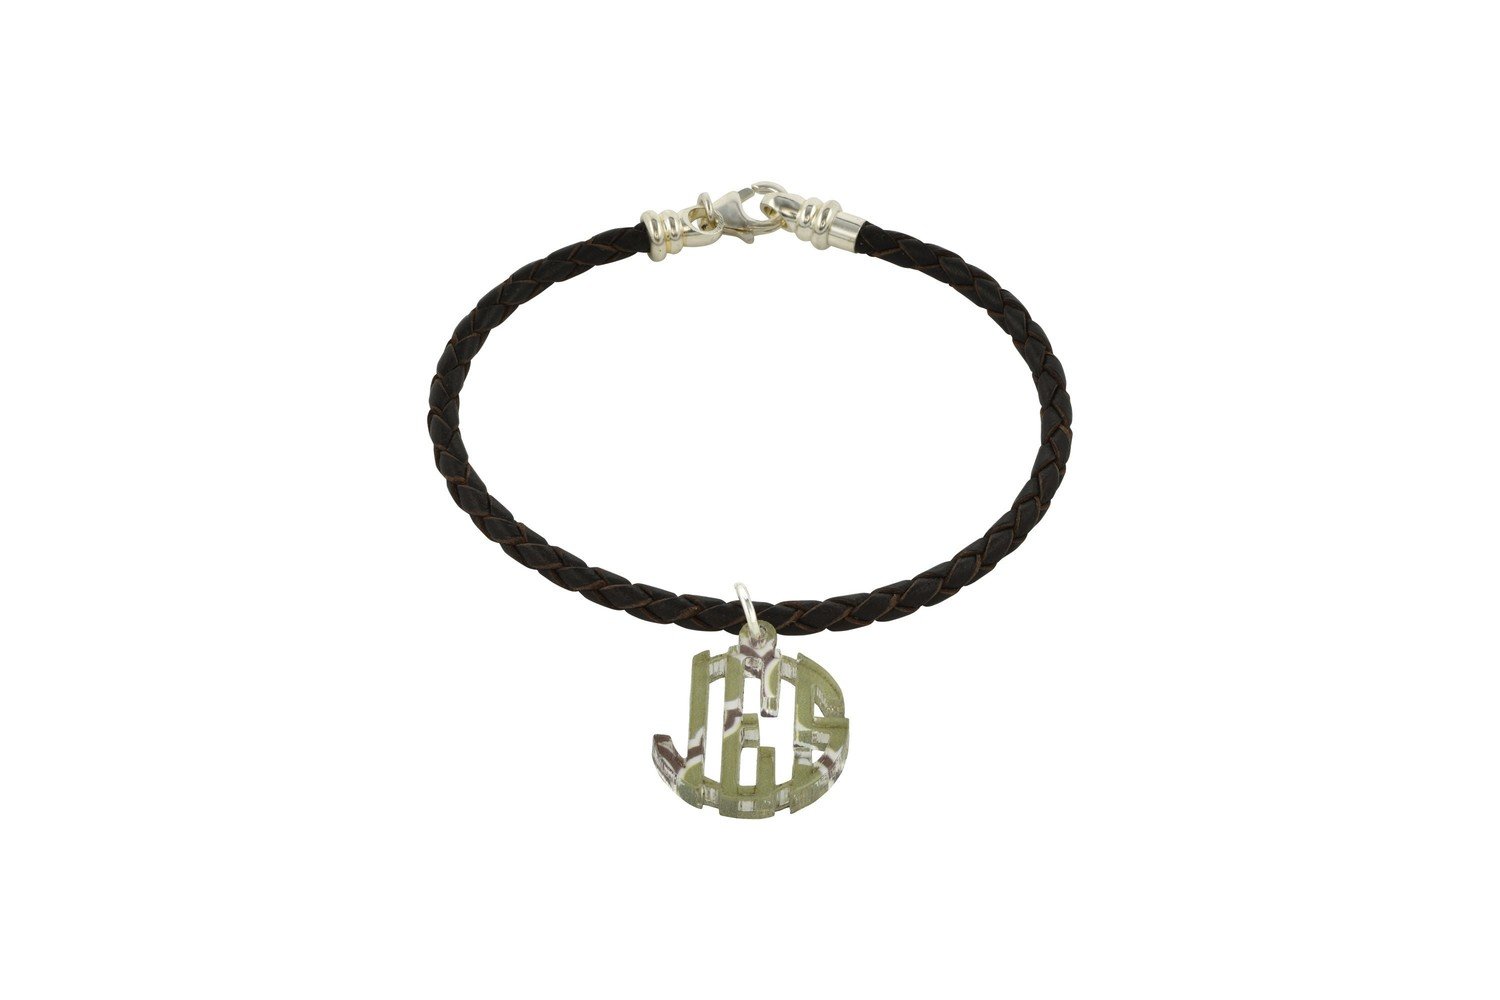 Clean Block Monogram with Decorative Braided Leather Cord Bracelet